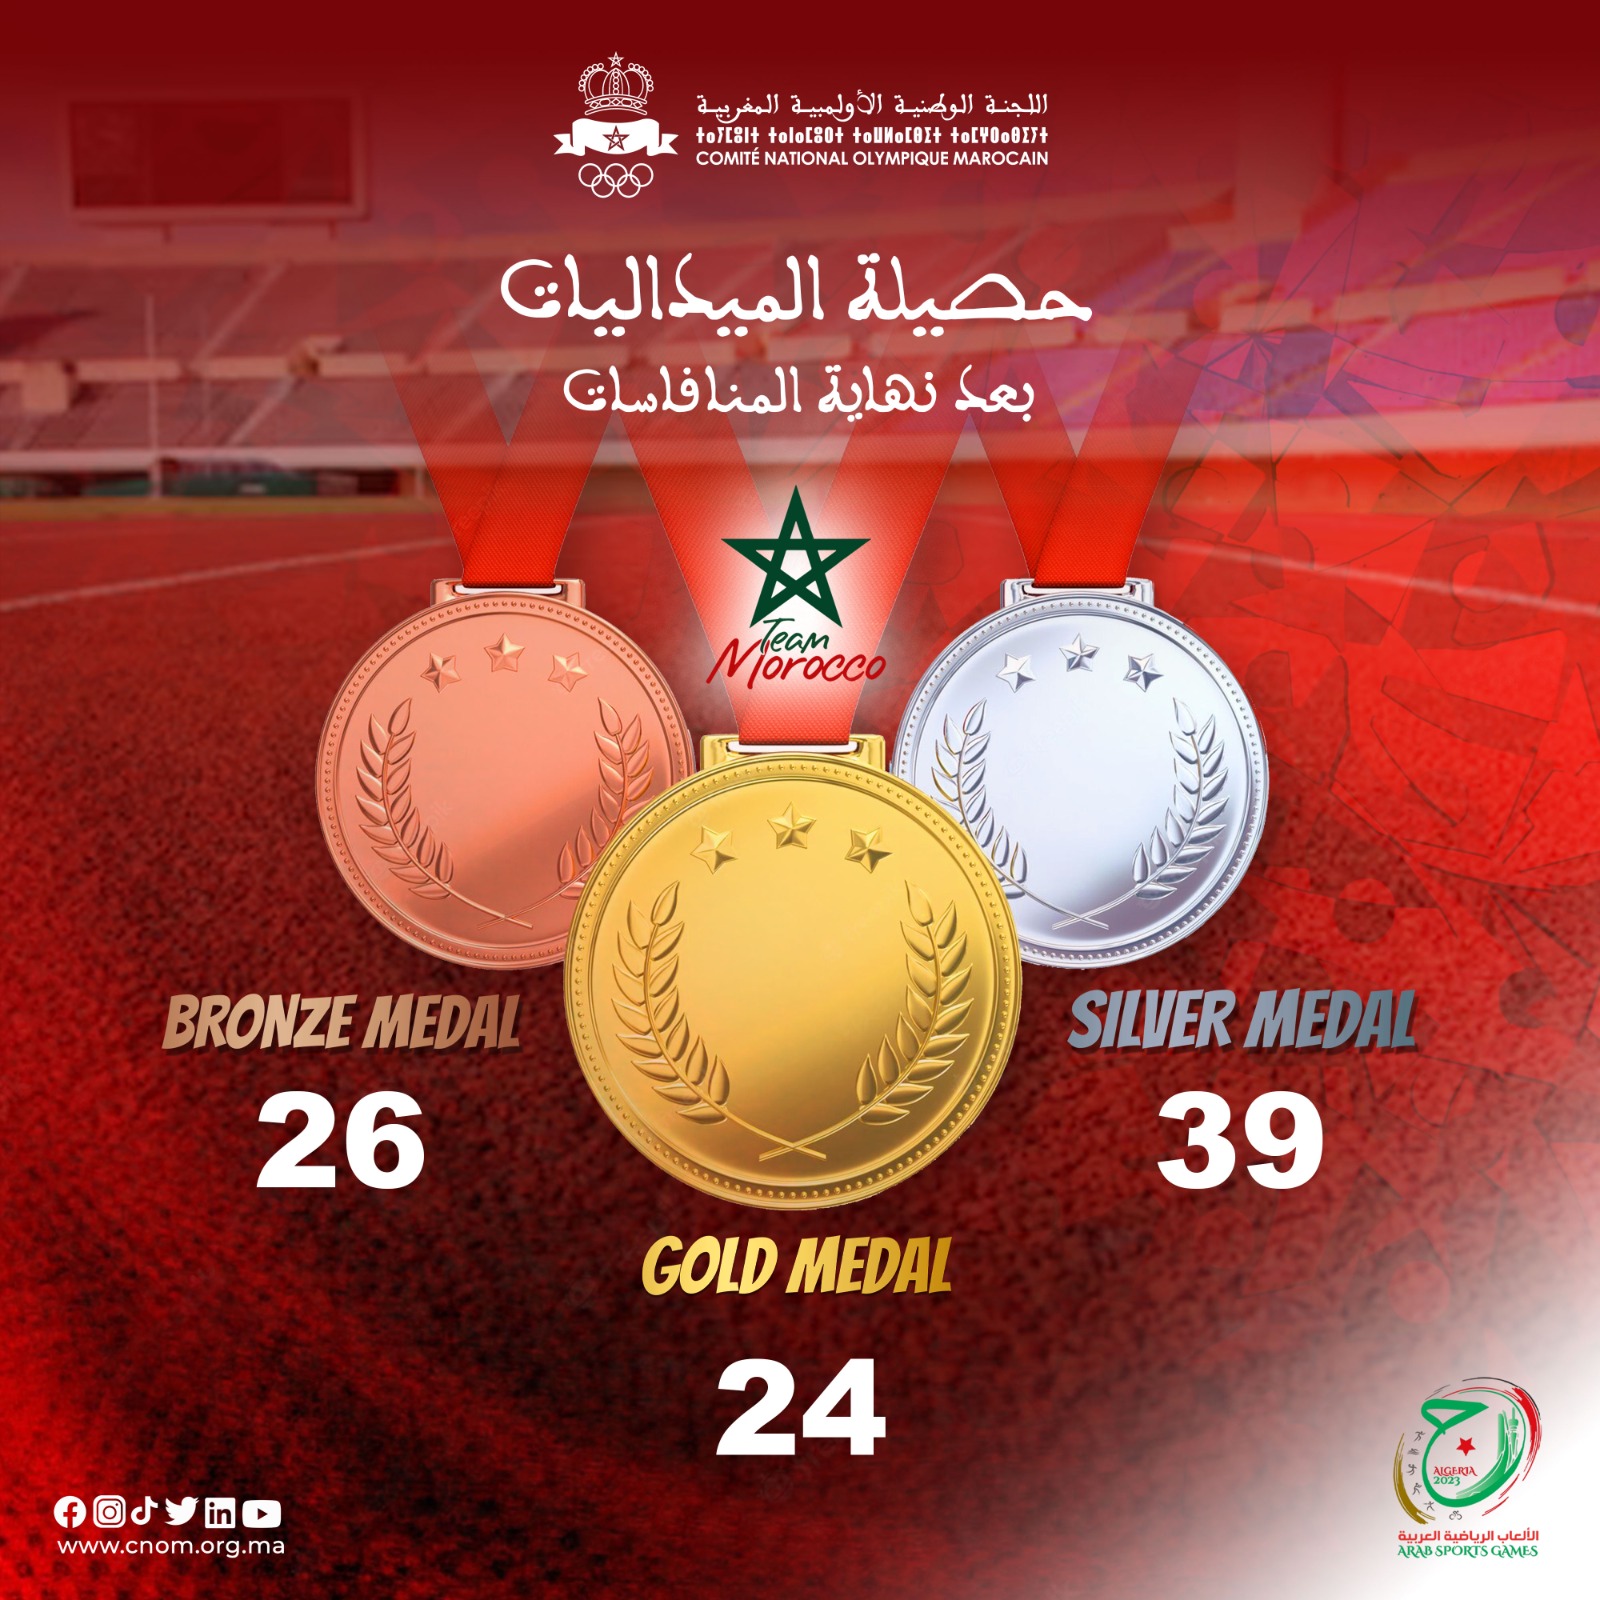 Les médaillés olympiques marocains  CNOM - Le Comité National Olympique  Marocain